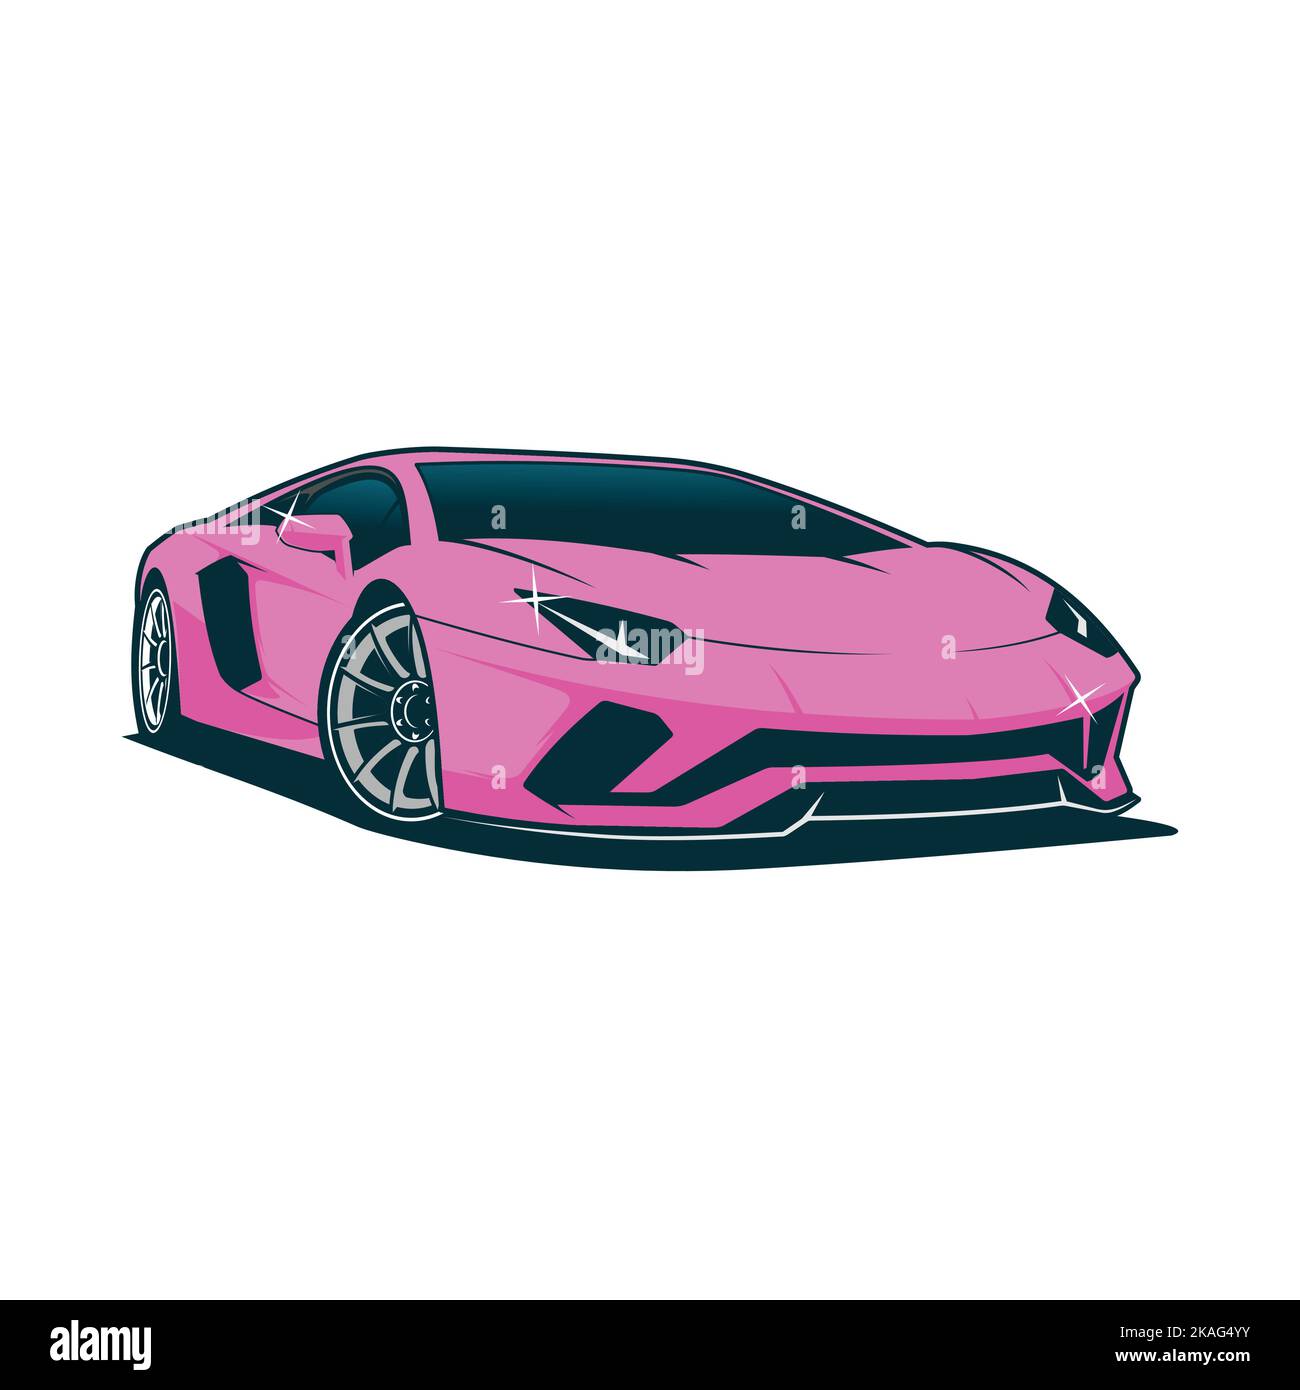 Rosa Lamborghini Vektor-T-Shirt-Design. Kuchendekoration png eps Formate. Jetzt herunterladen Stock Vektor